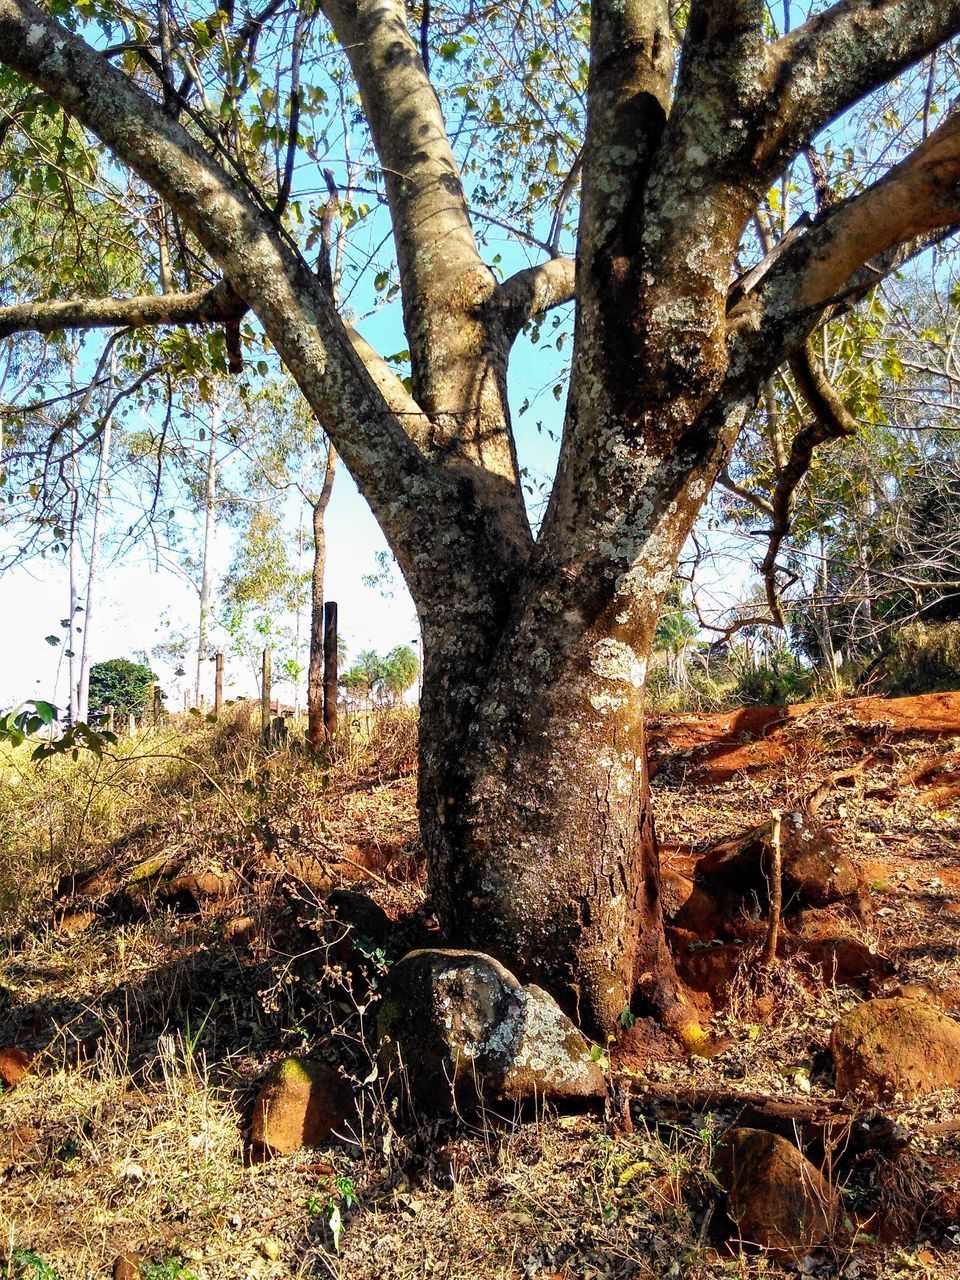 VIEW OF TREE TRUNK IN FIELD